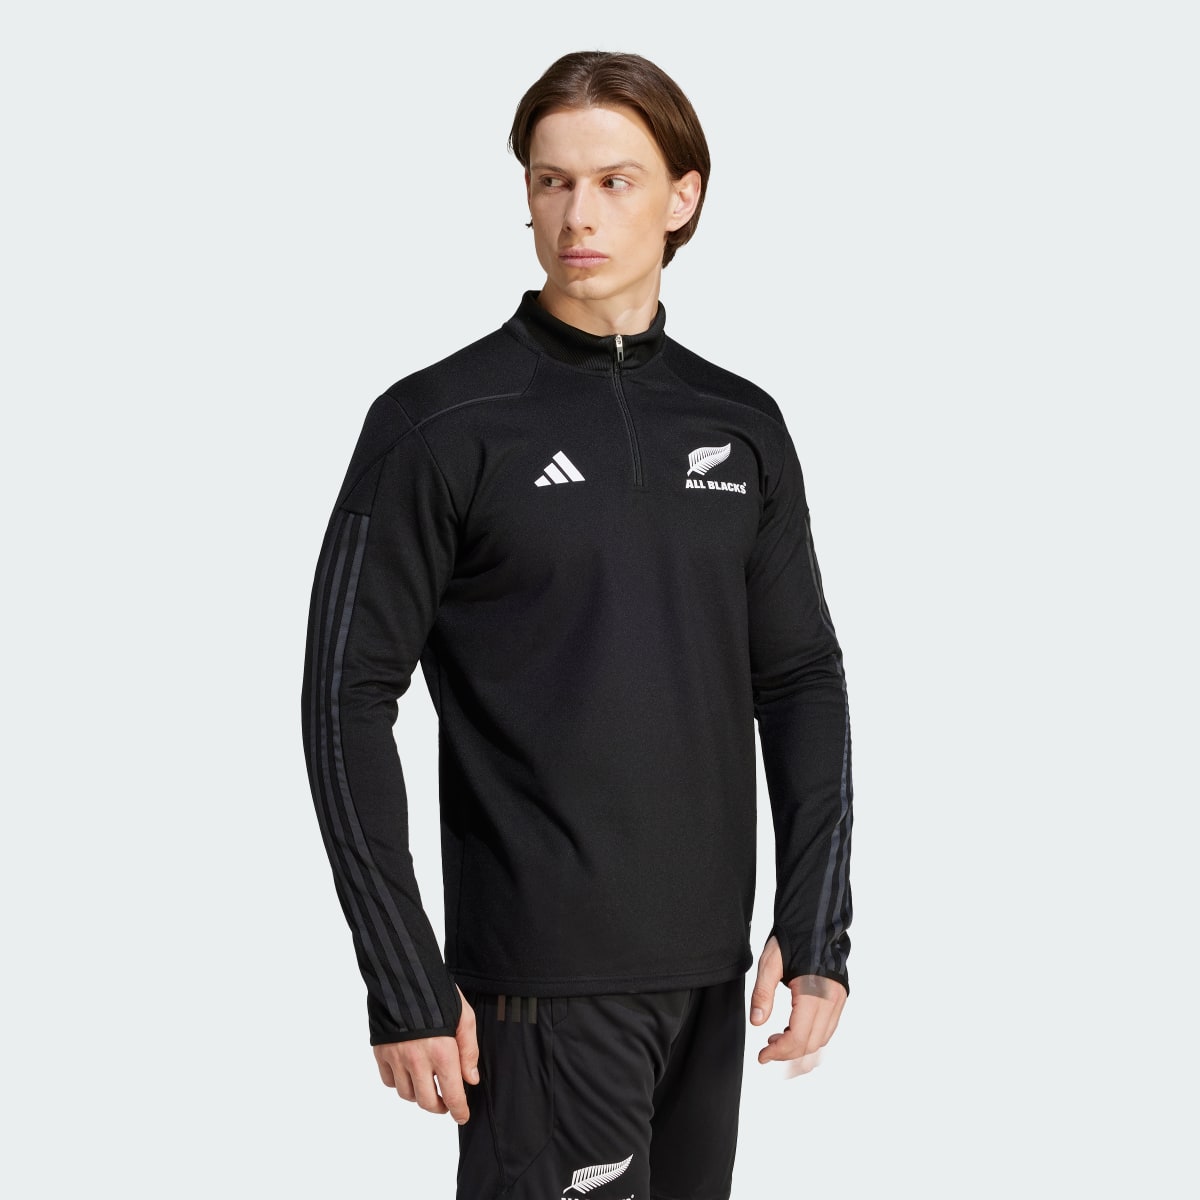 Adidas All Blacks AEROREADY Warming Long Sleeve Fleece Top. 4